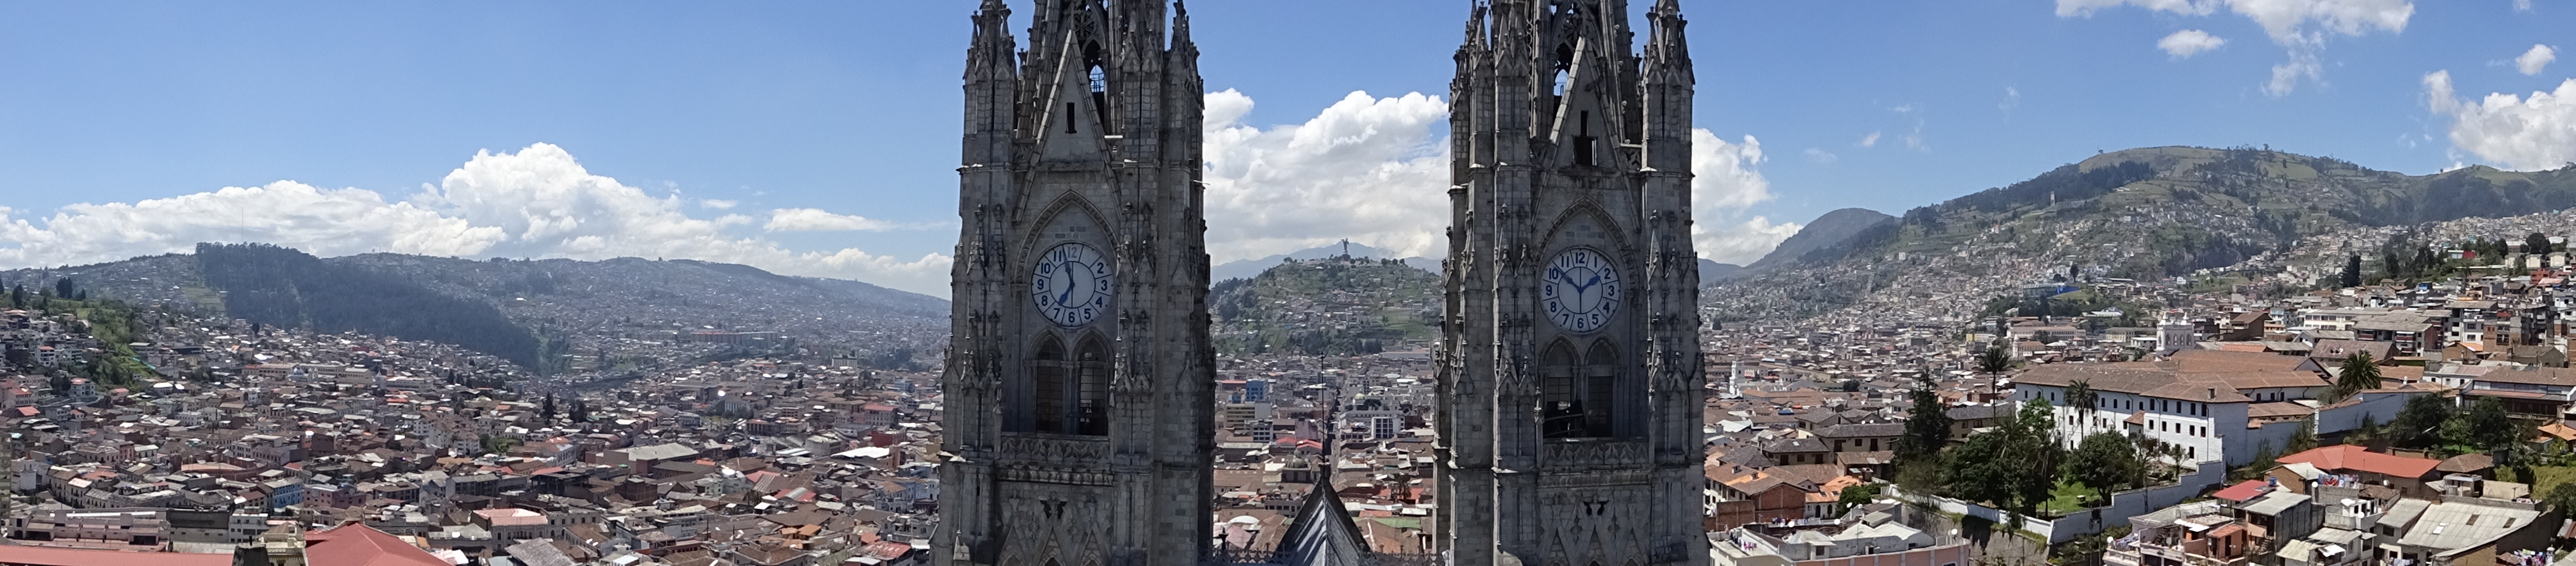 Blick auf Quitos Altstadt